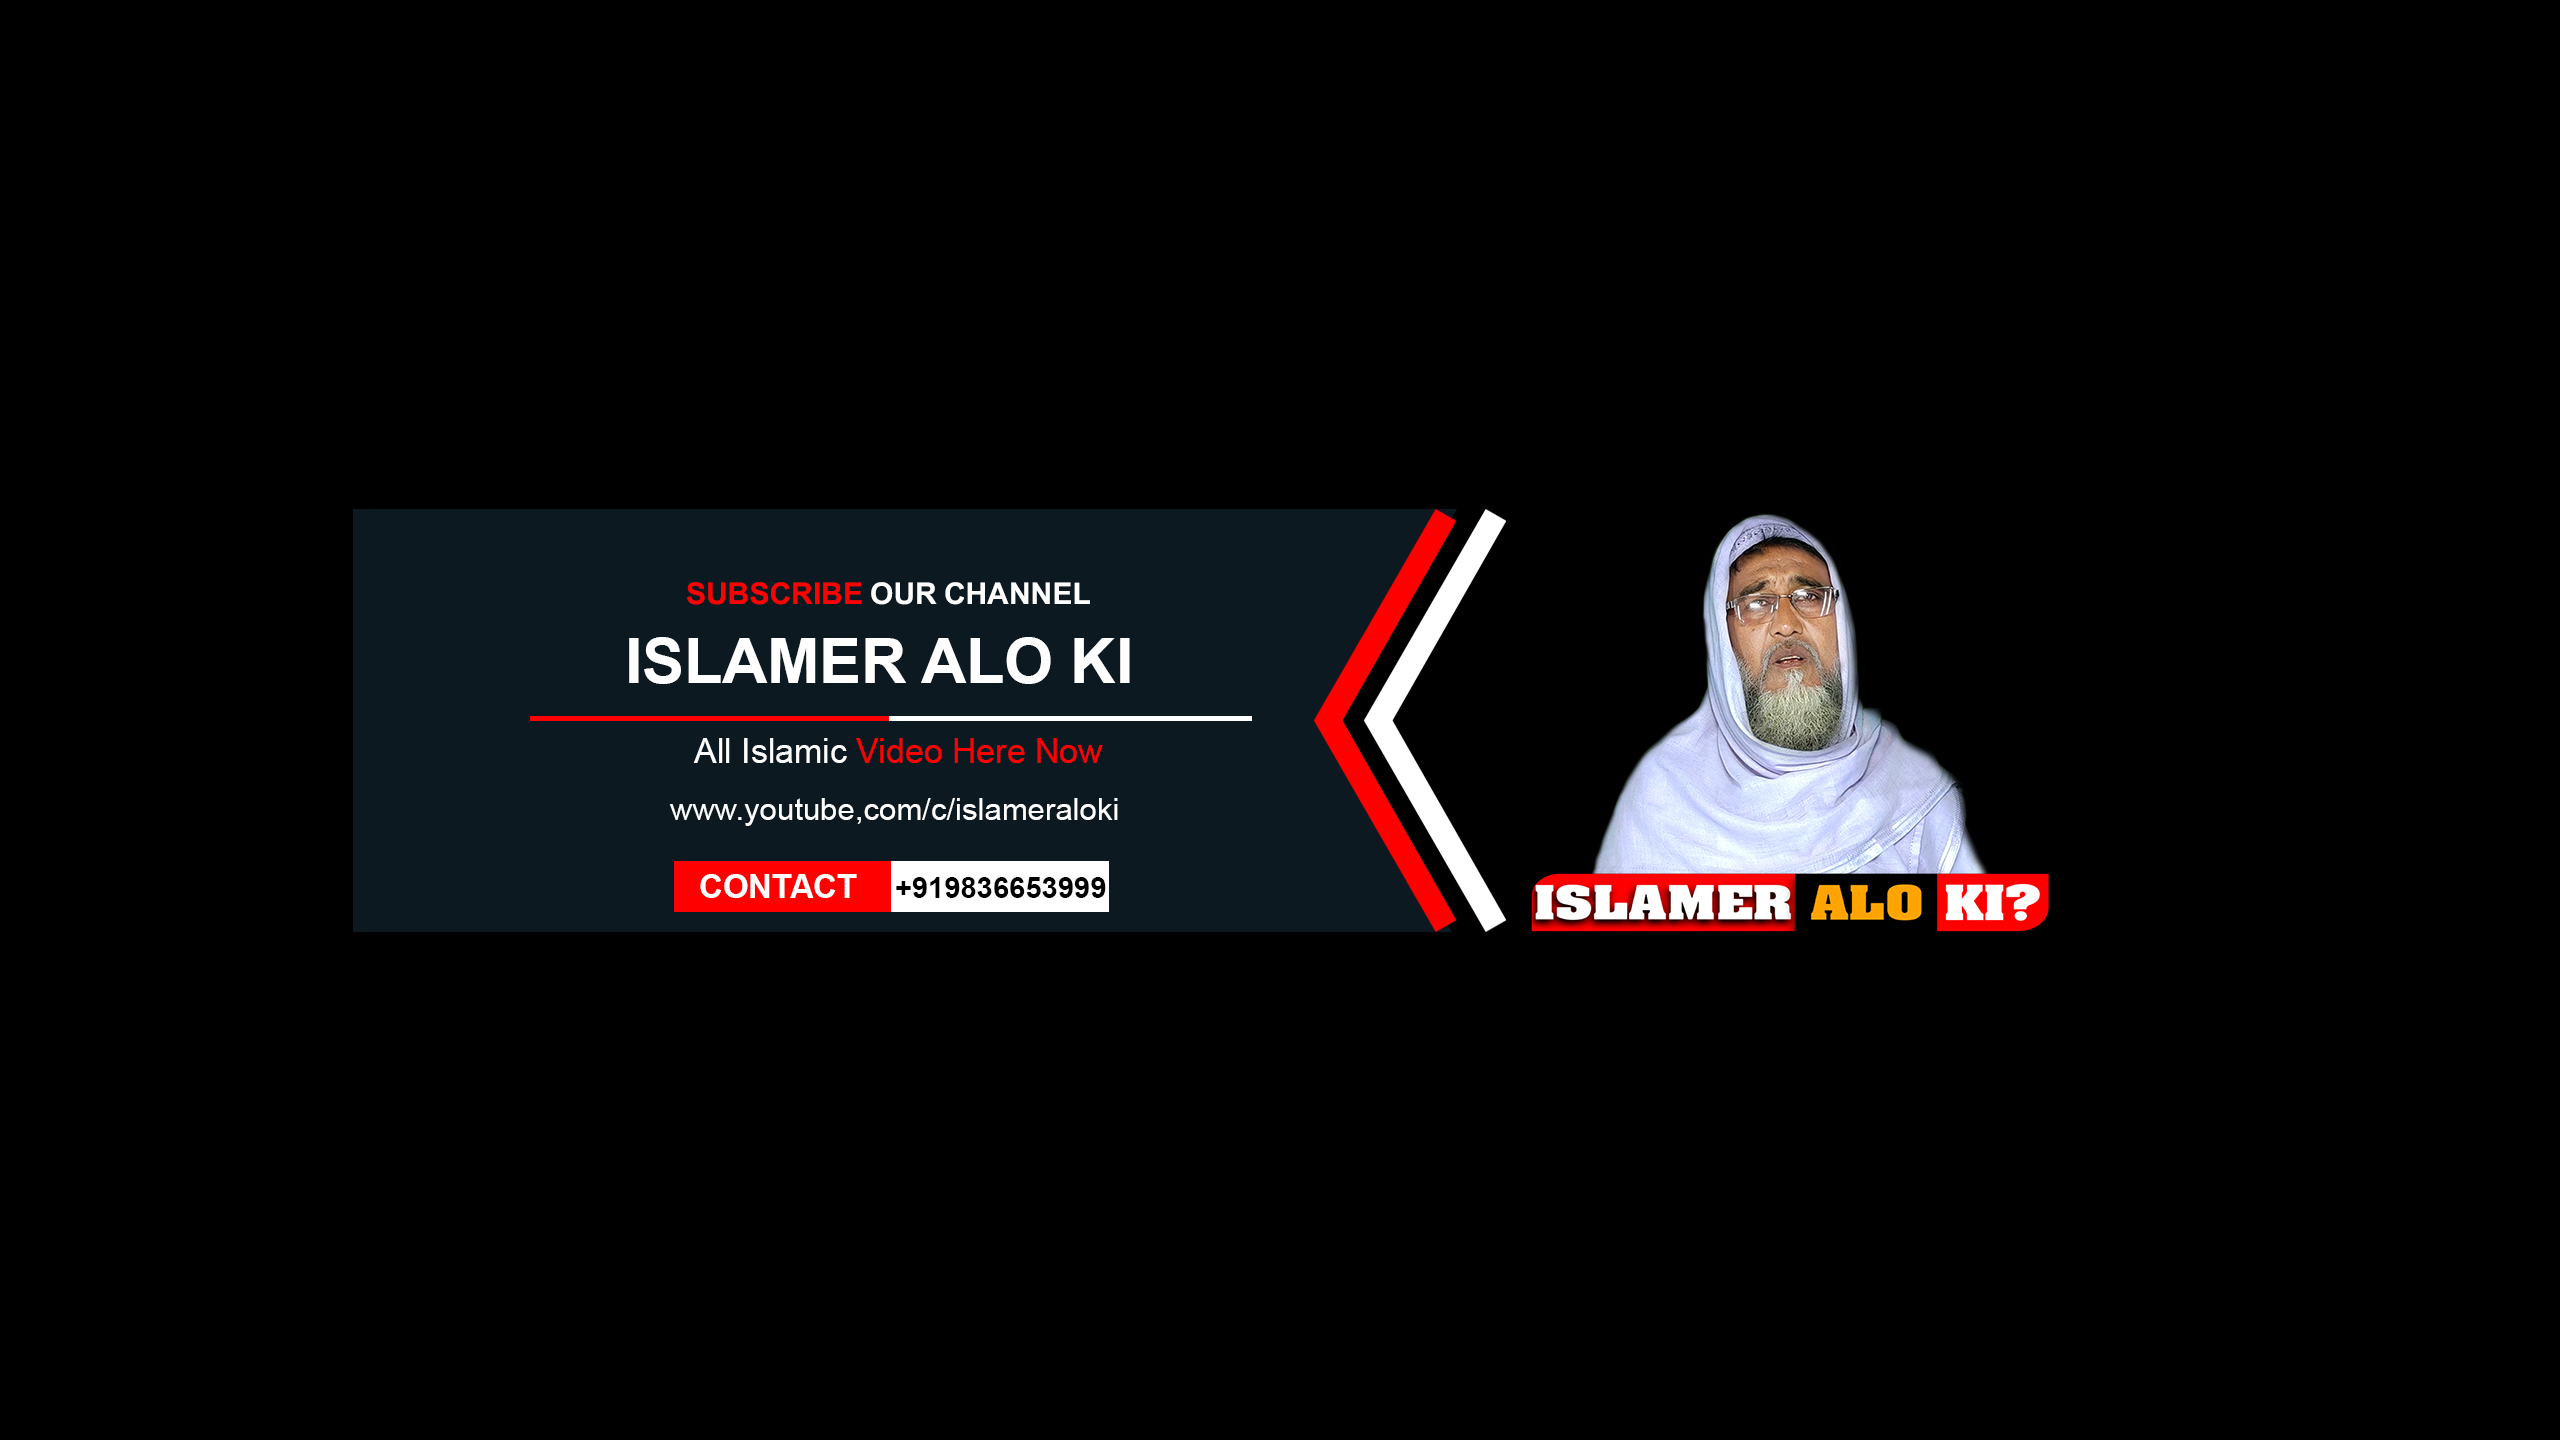 Islamer Alo Ki?